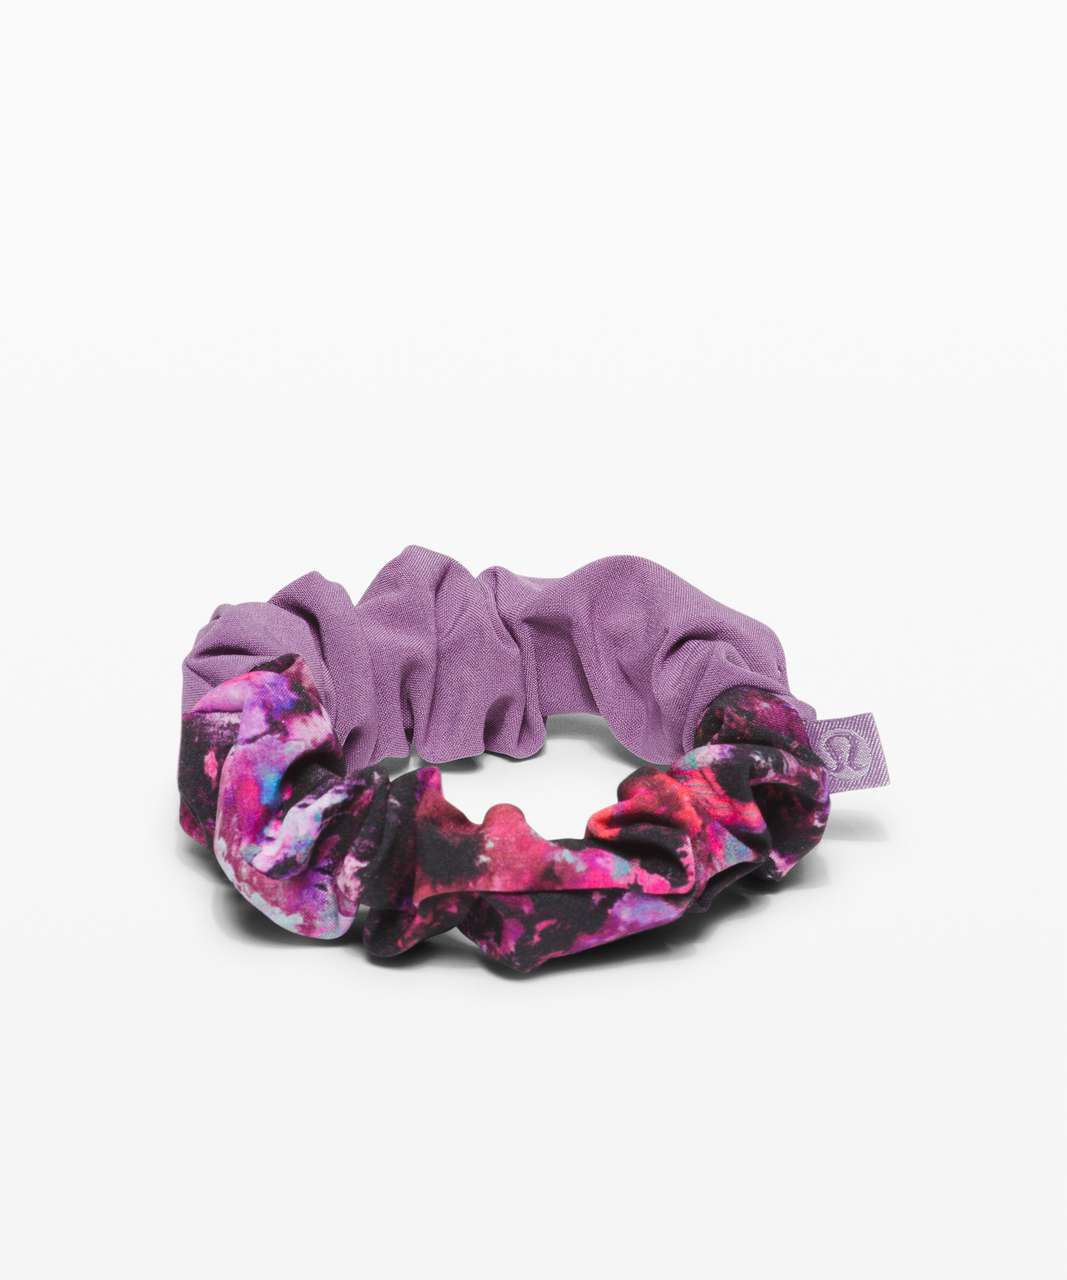 Lululemon Uplifting Scrunchie - Grape Mauve / Fluoro Floral Multi